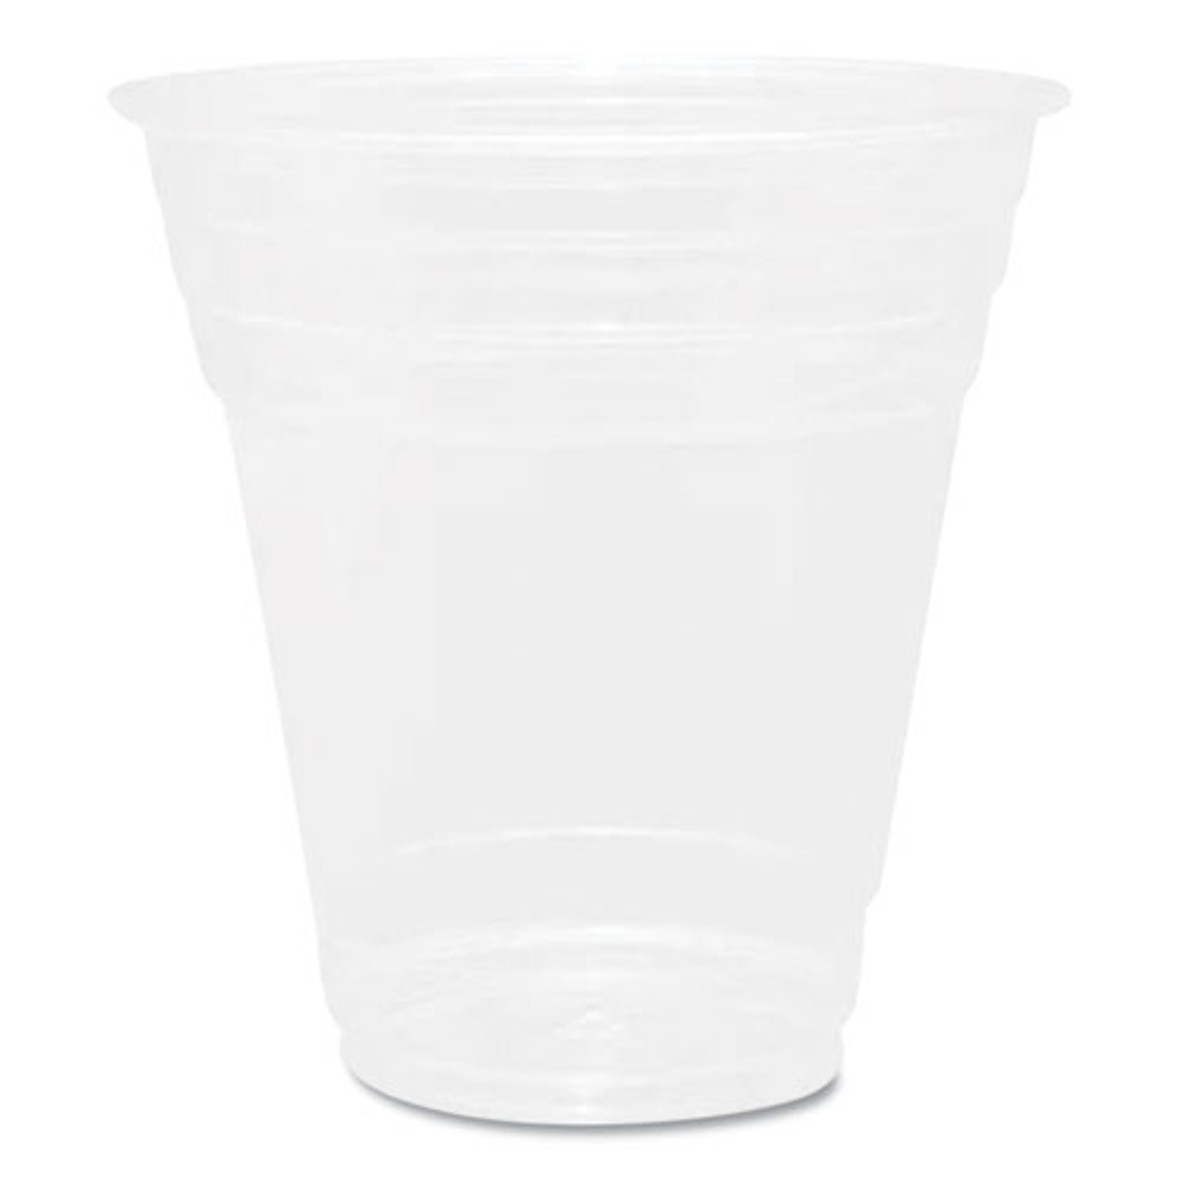 Karat PET Plastic Cups, 98 Mm Rim Diameter, 12 Oz, Clear, 1,000/carton